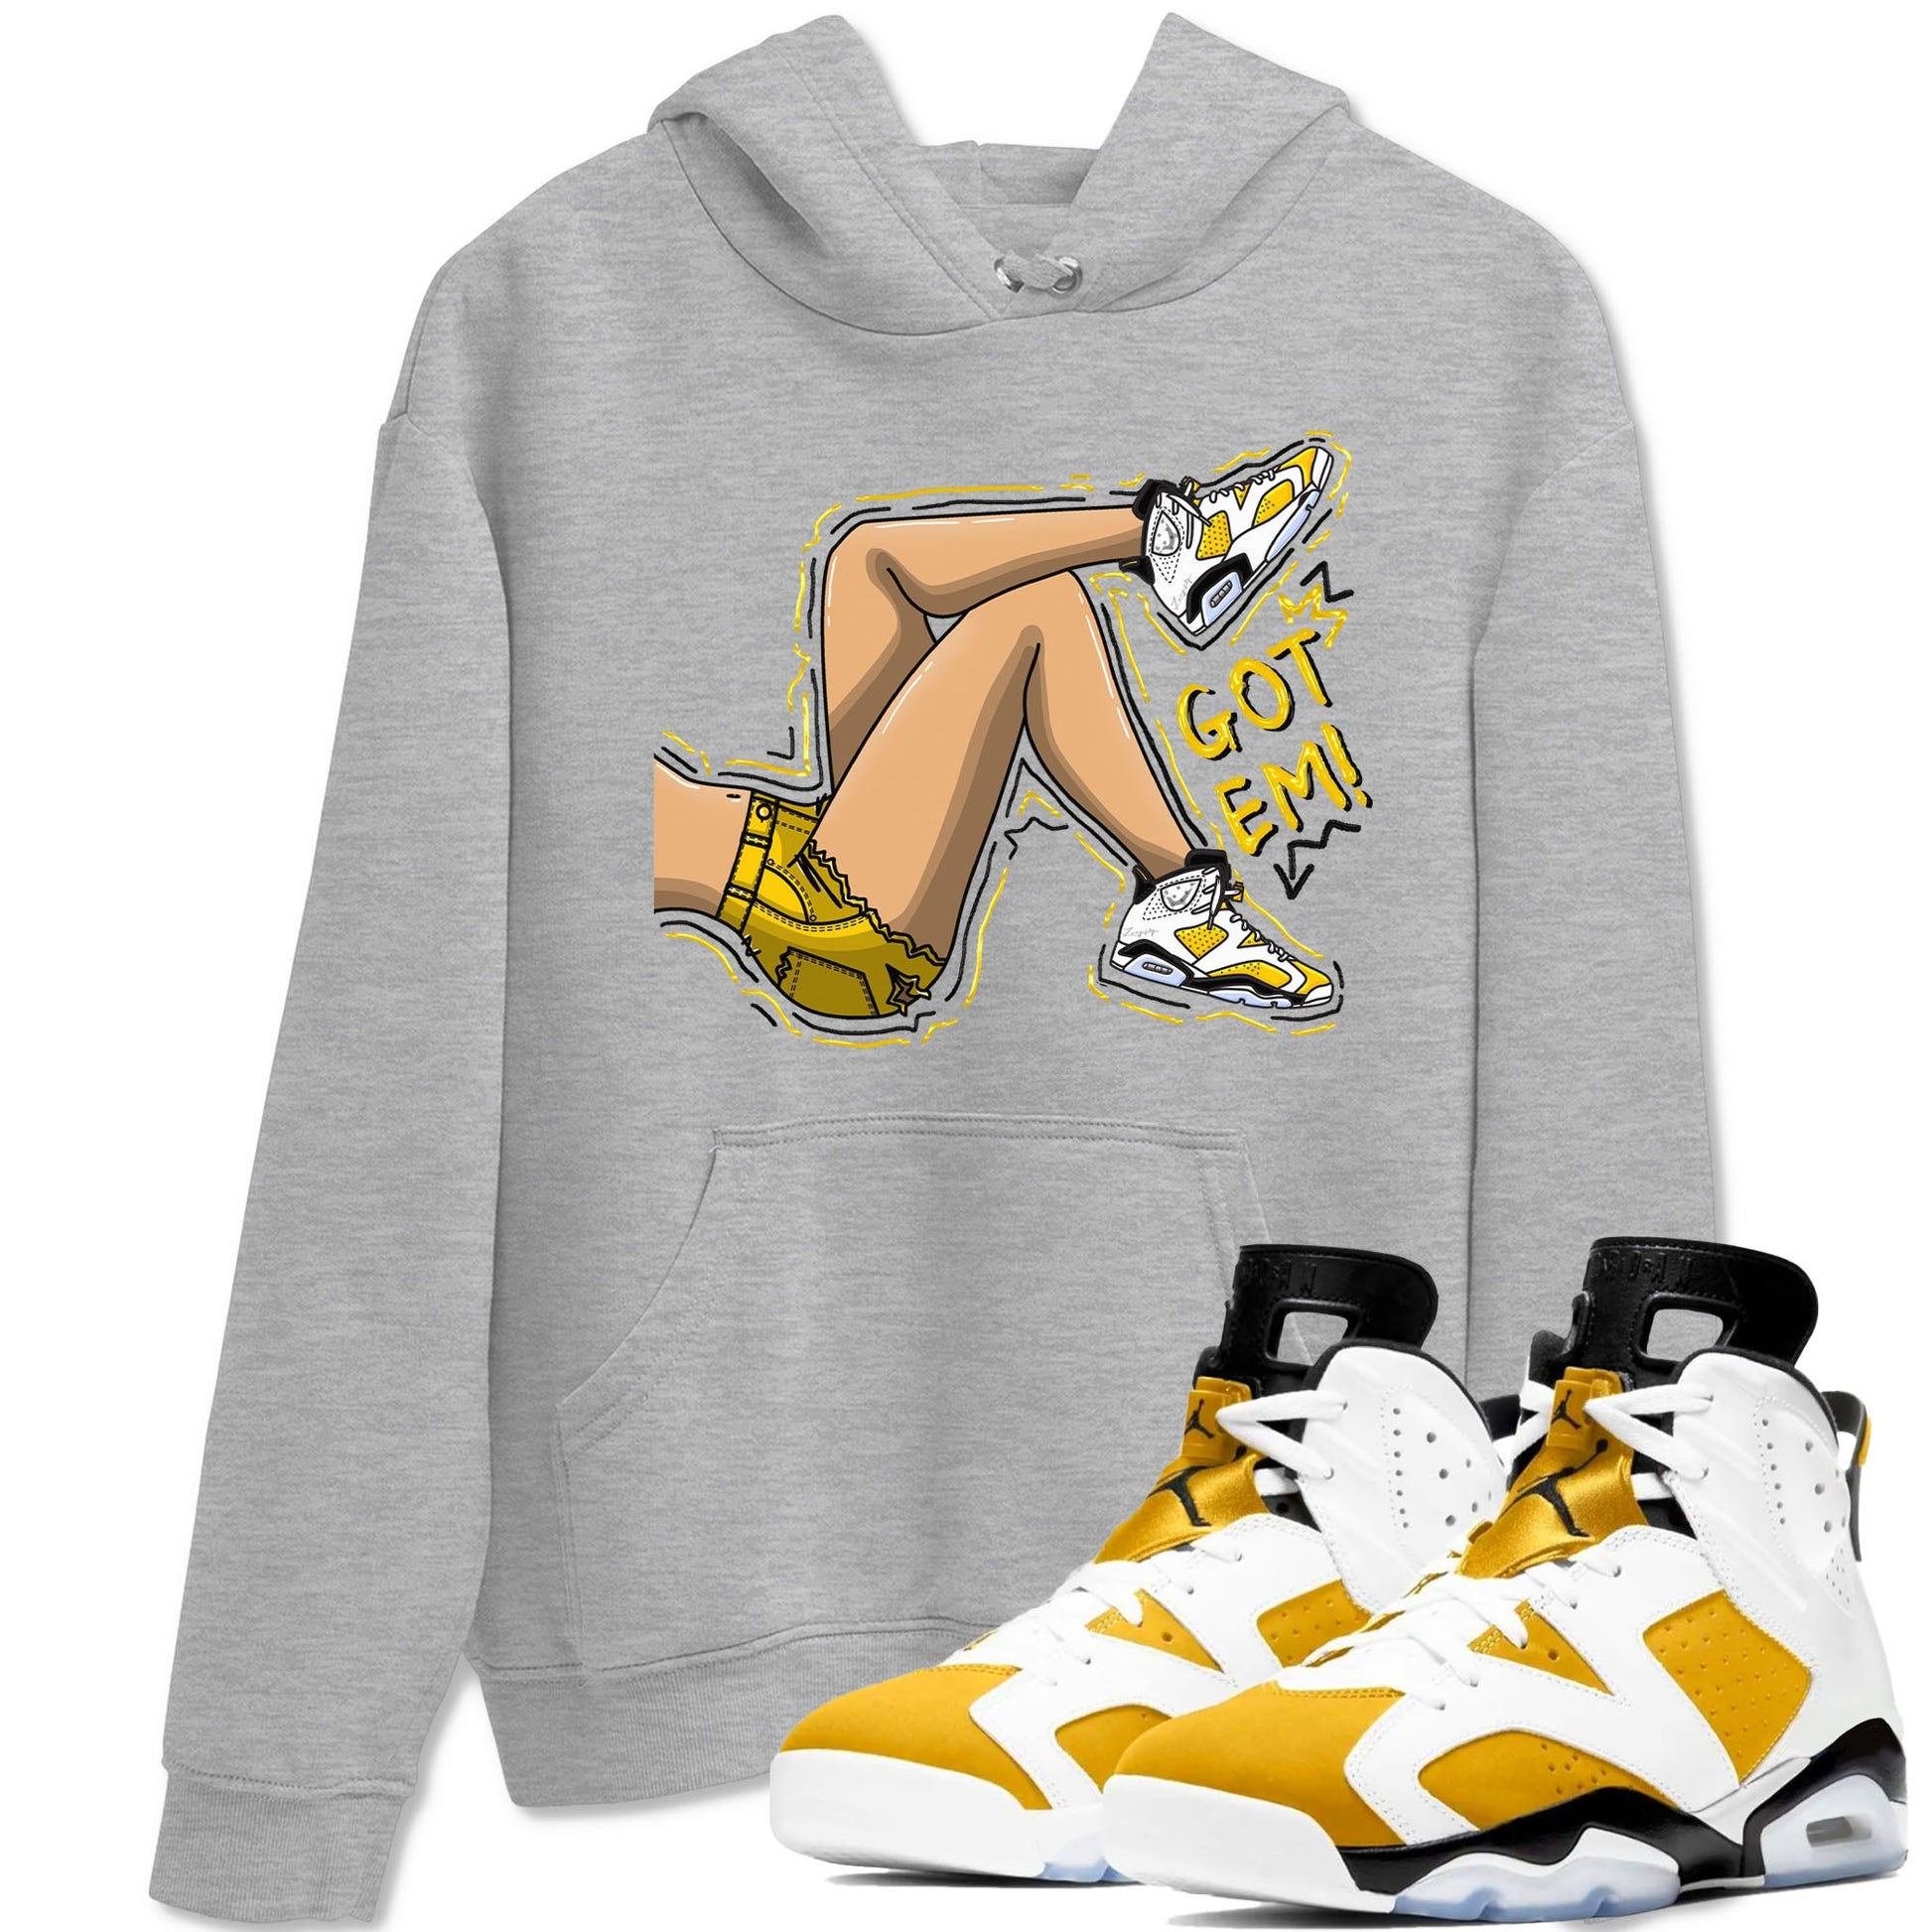 Got Em Legs sneaker match tees to Yellow Ochre 6s street fashion brand for shirts to match Jordans SNRT Sneaker Tees Air Jordan 6 Yellow Ochre unisex t-shirt Heather Grey 1 unisex shirt